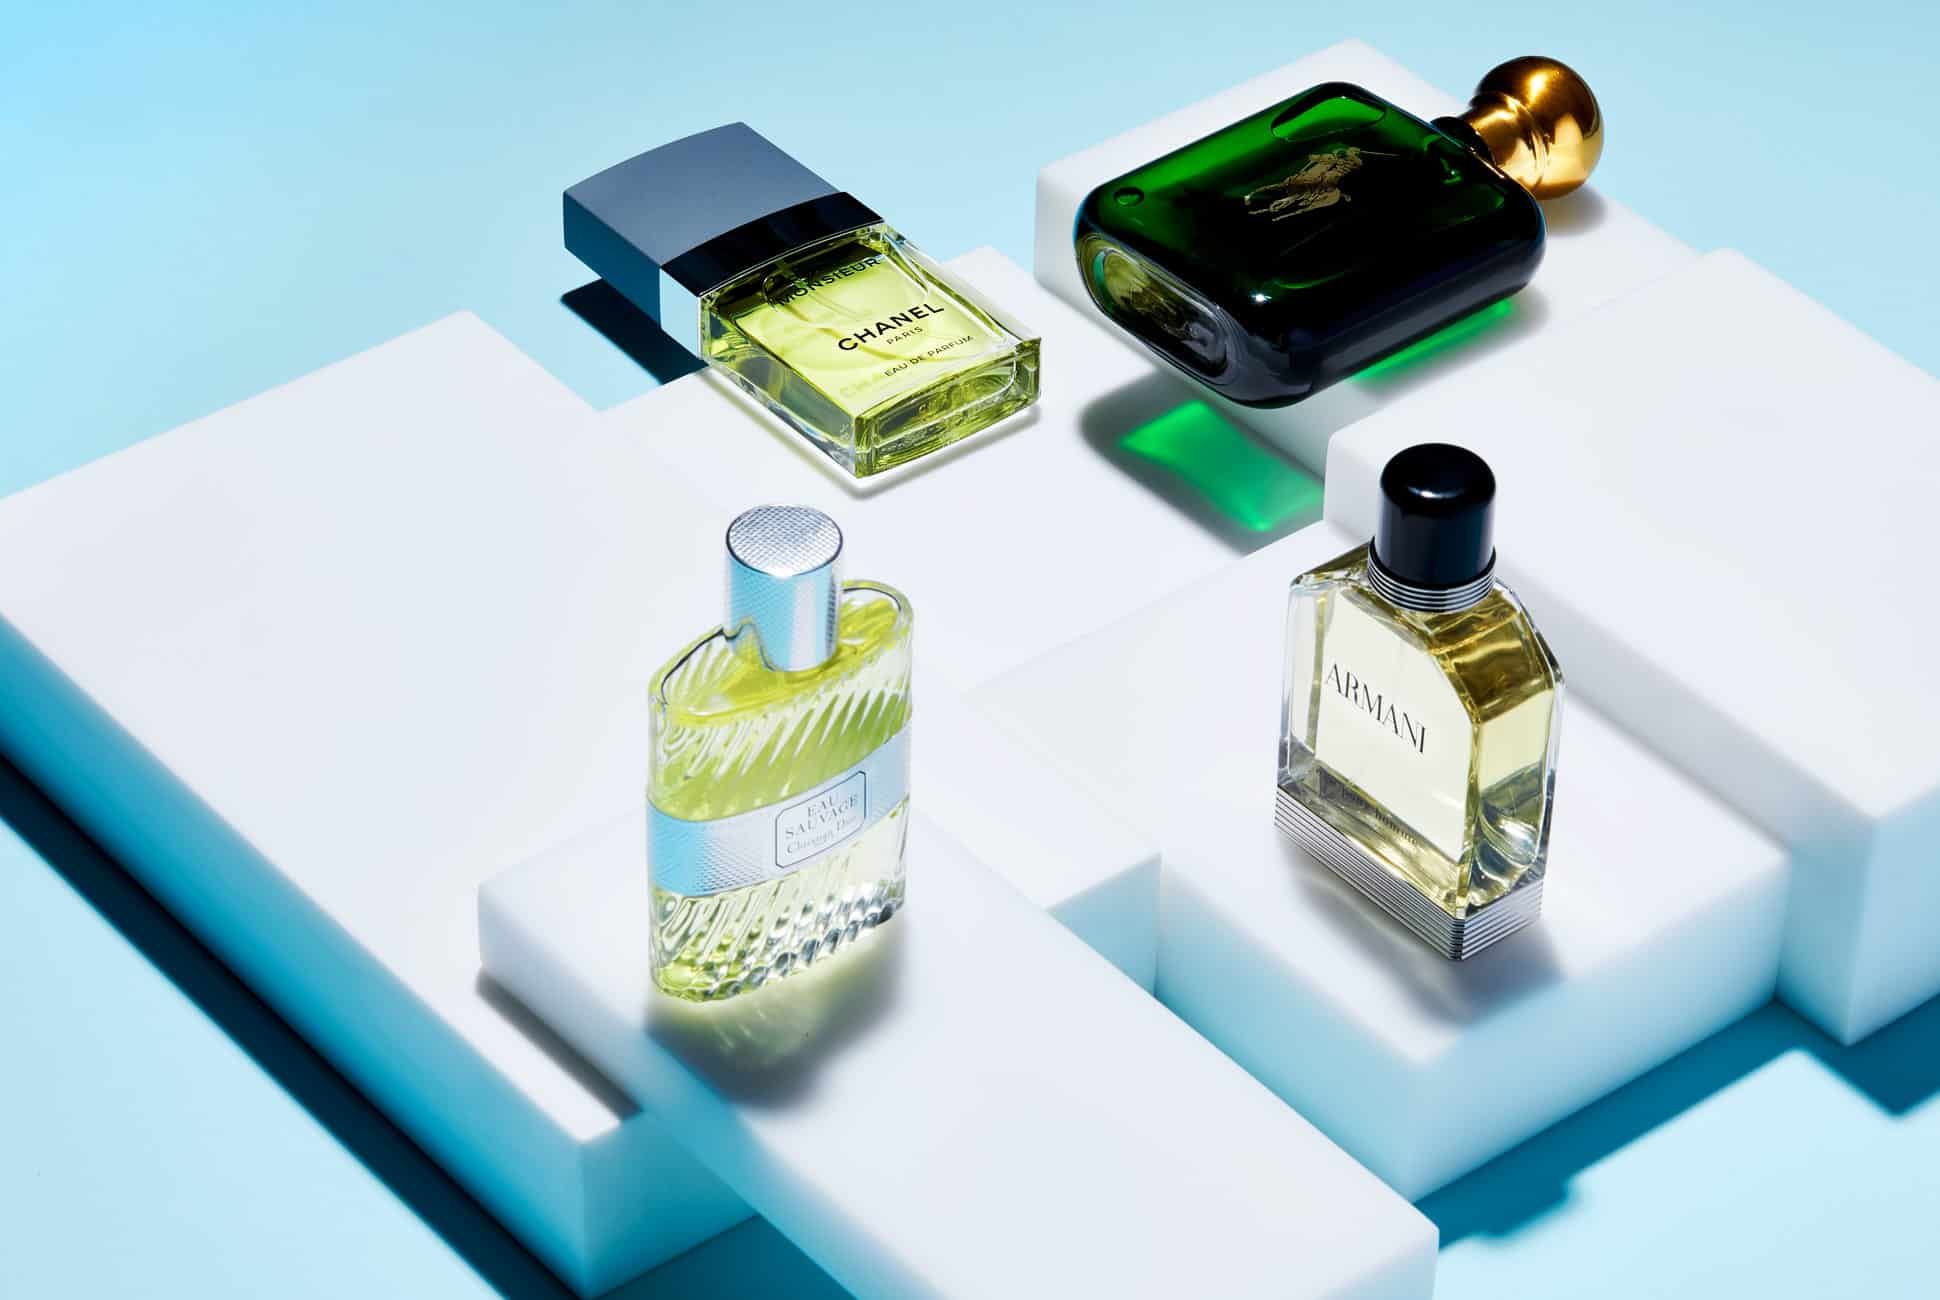 The 6 Summer Fragrances for Men, Reviewed